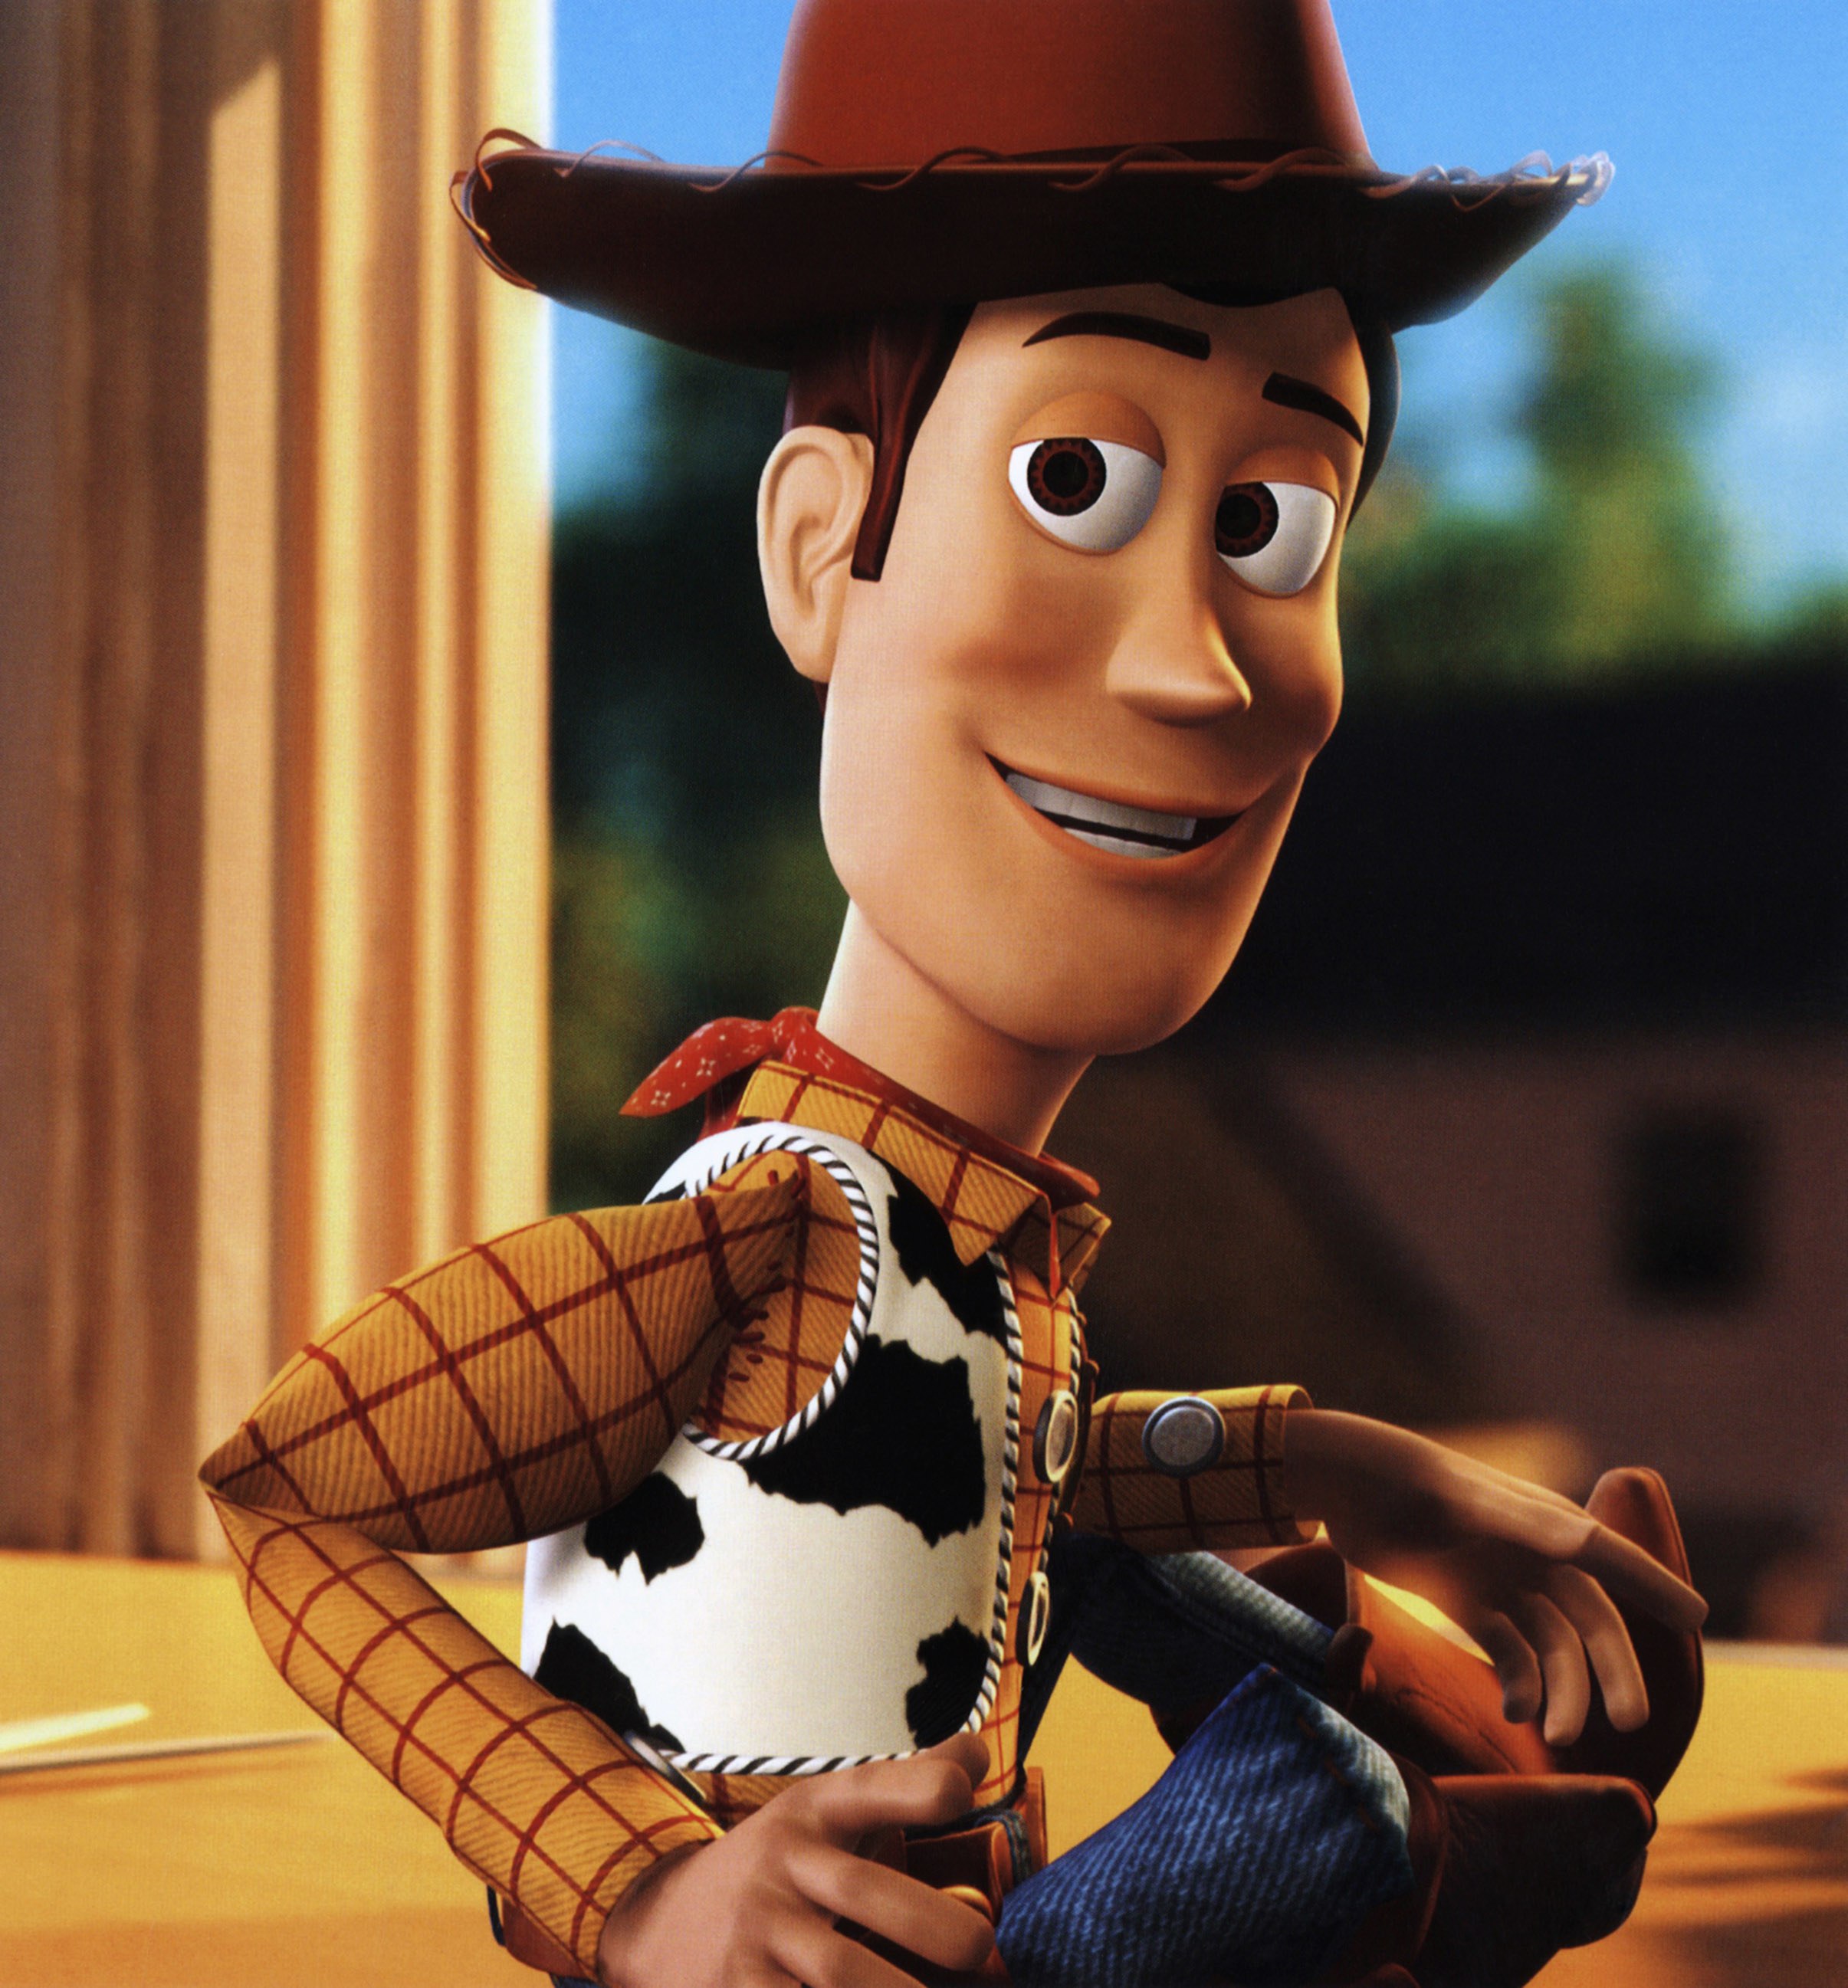 Woody smiling